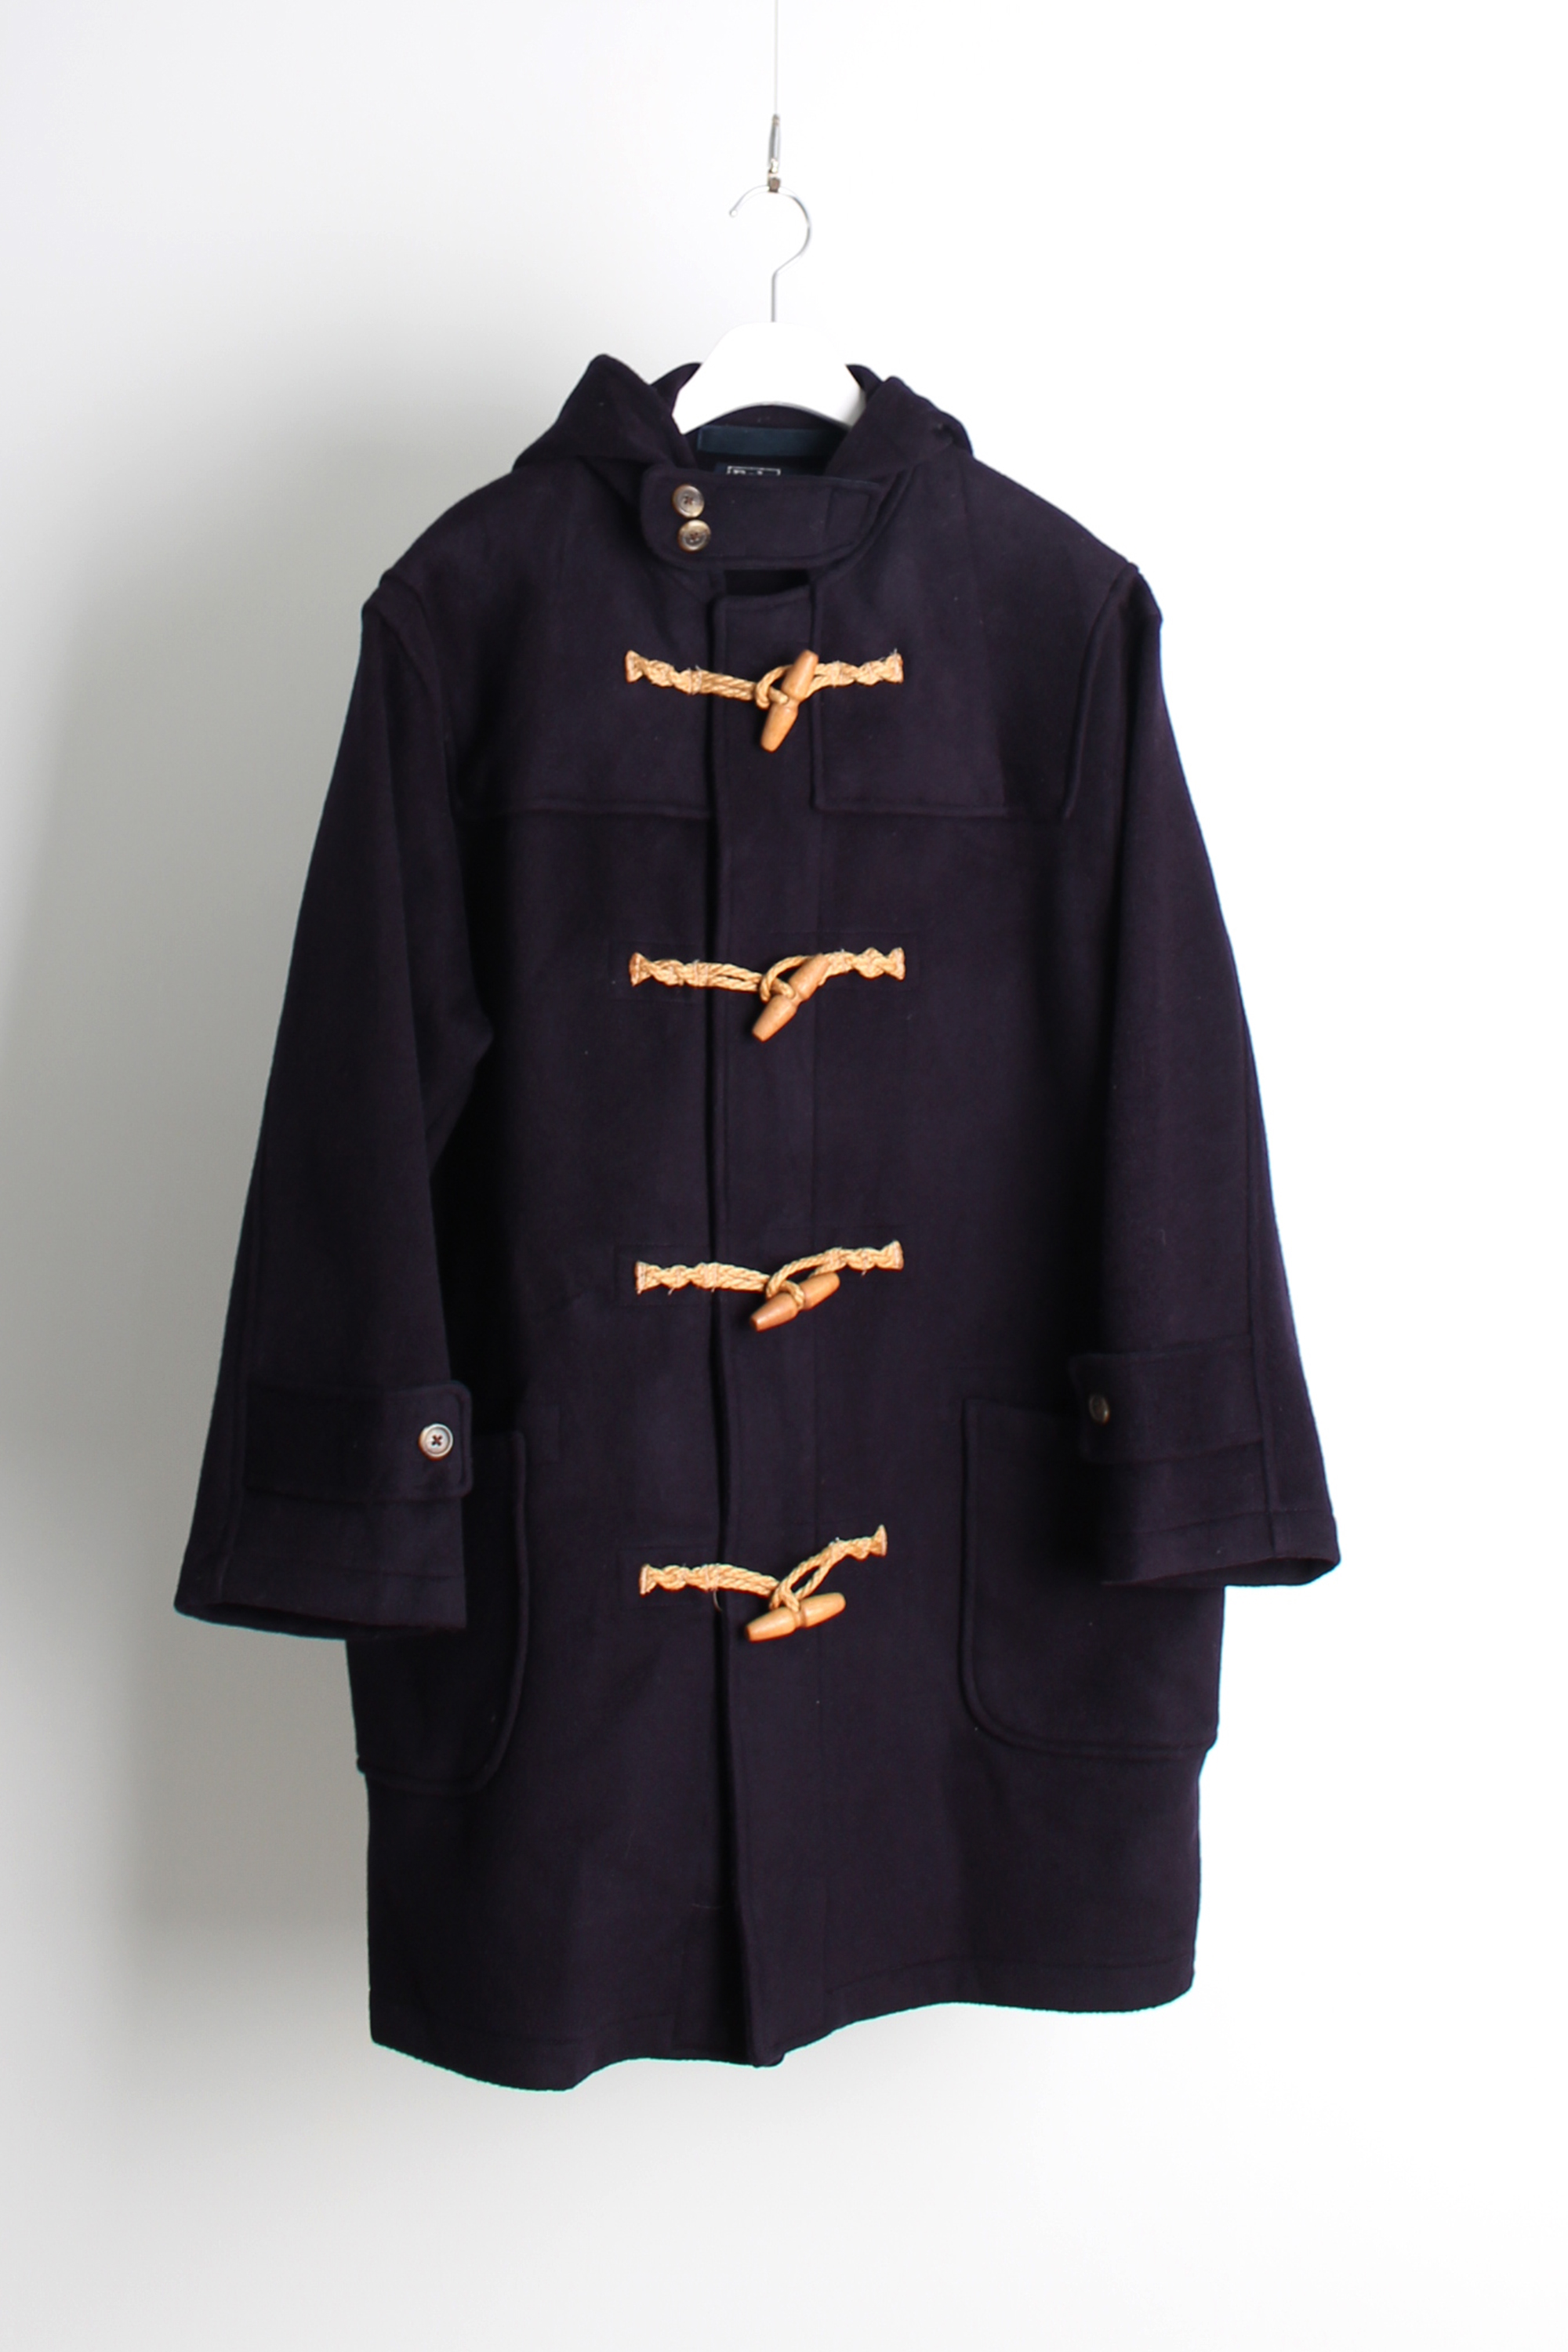 Polo Ralph Lauren duffel coat(made in usa)